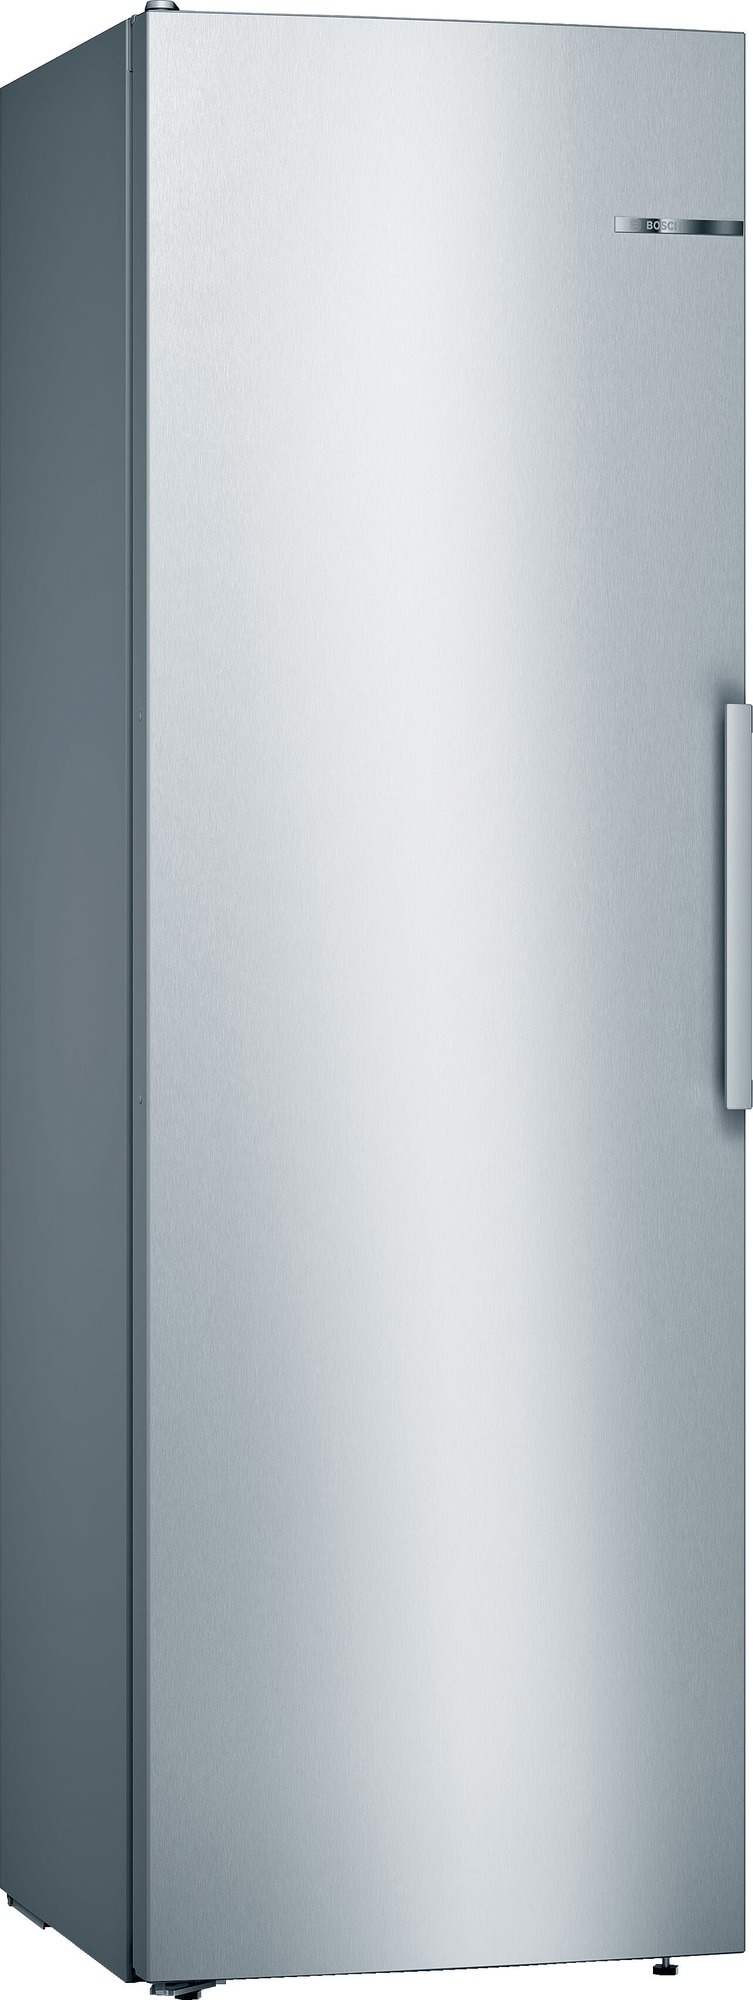 #2 - Bosch Series 4 køleskab KSV36VIEP